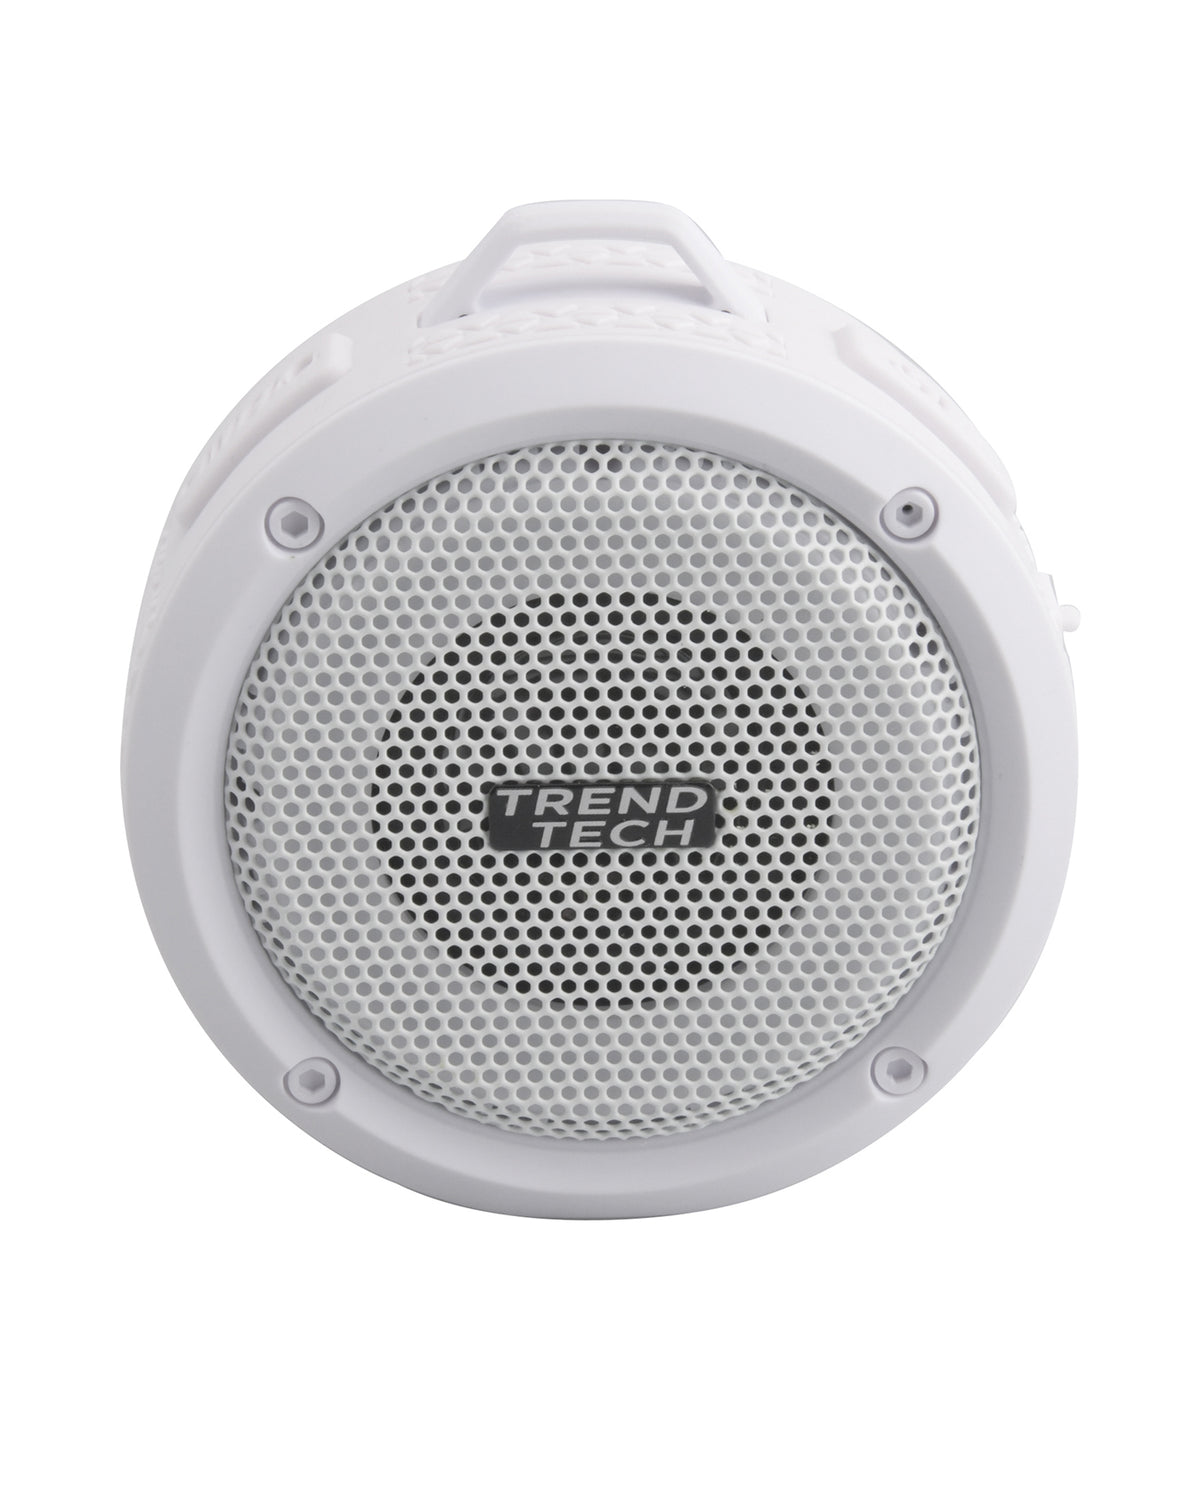 Super Sound Waterproof Led Speaker - White